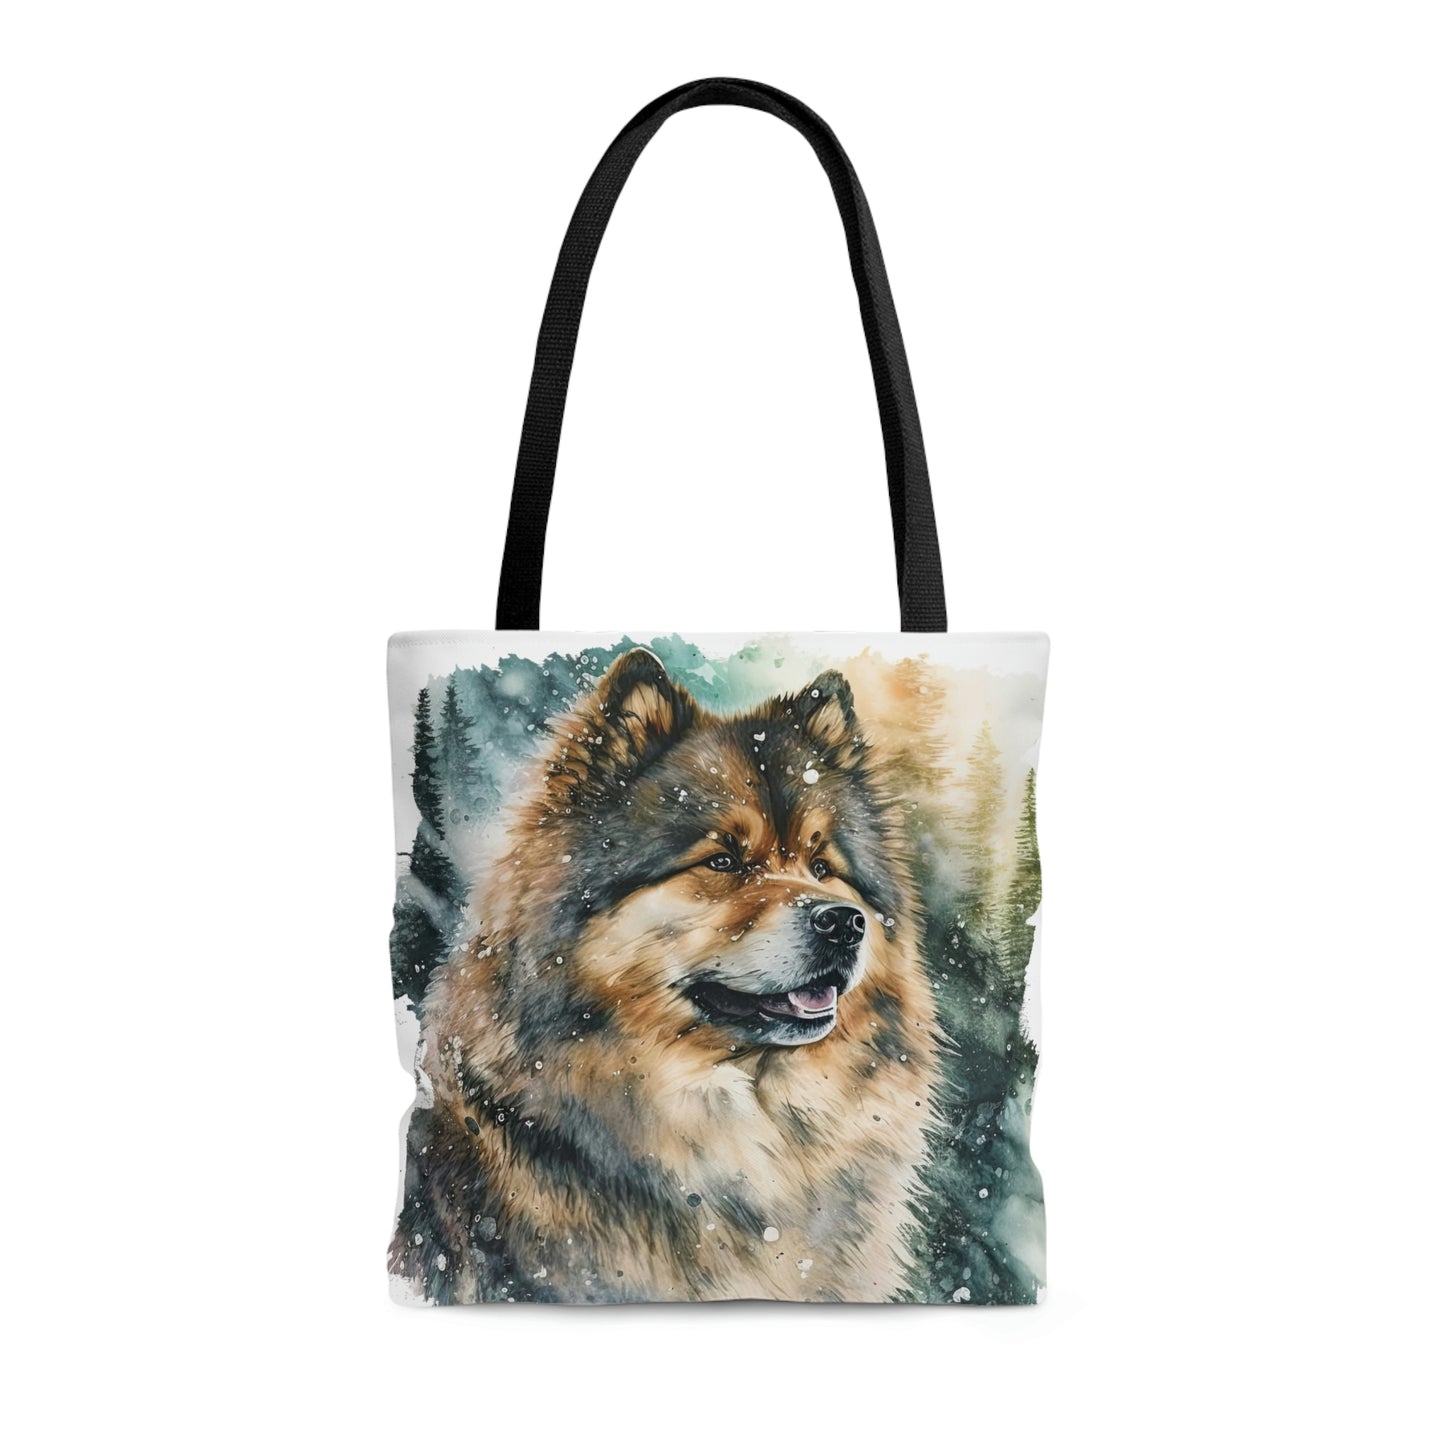 Finnish Lapphund - Snowy #2 - Tote Bag